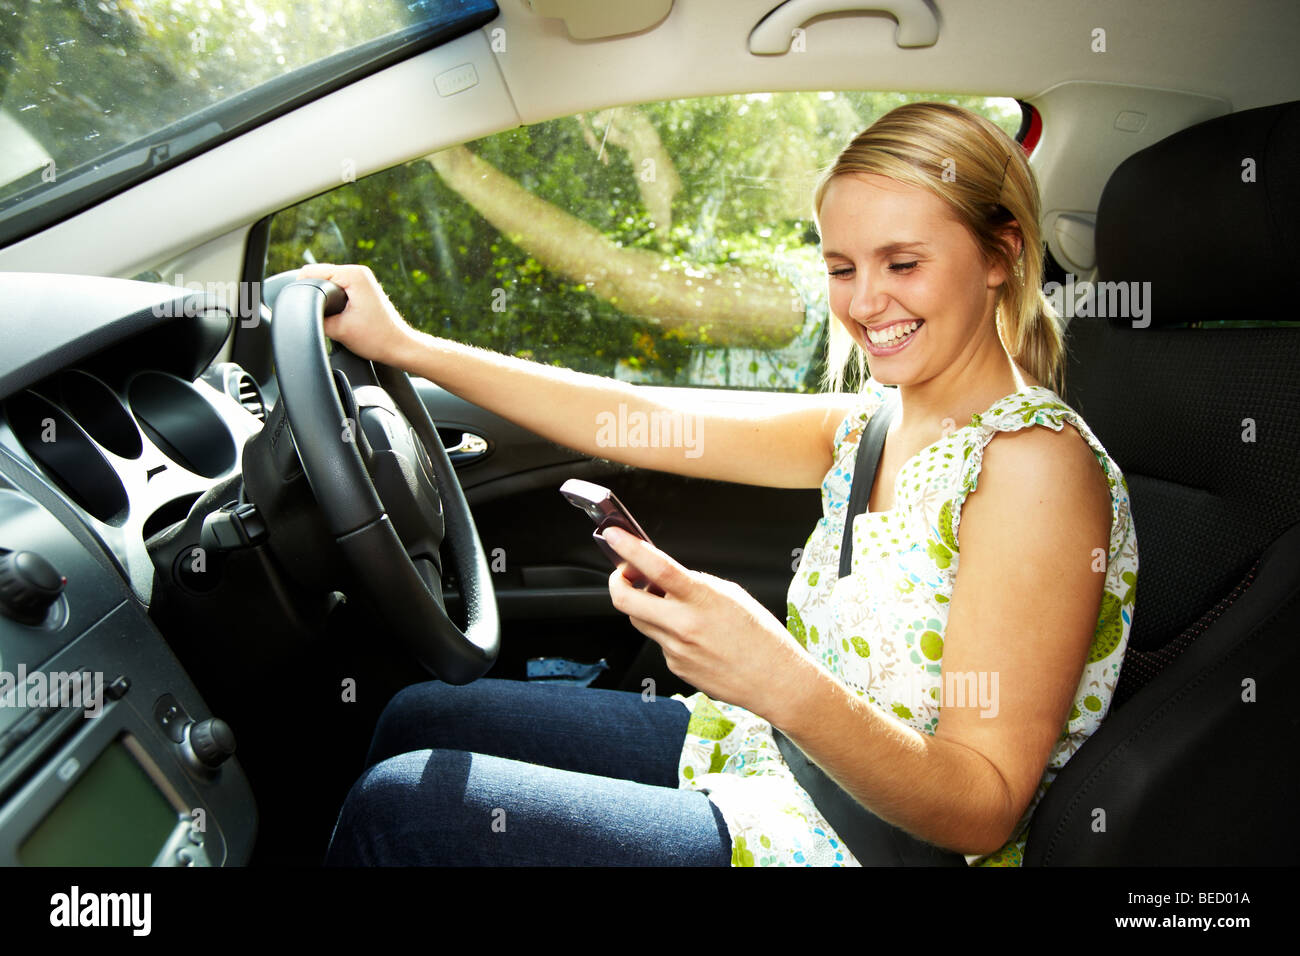 Girl driving car using phone Stock Photo